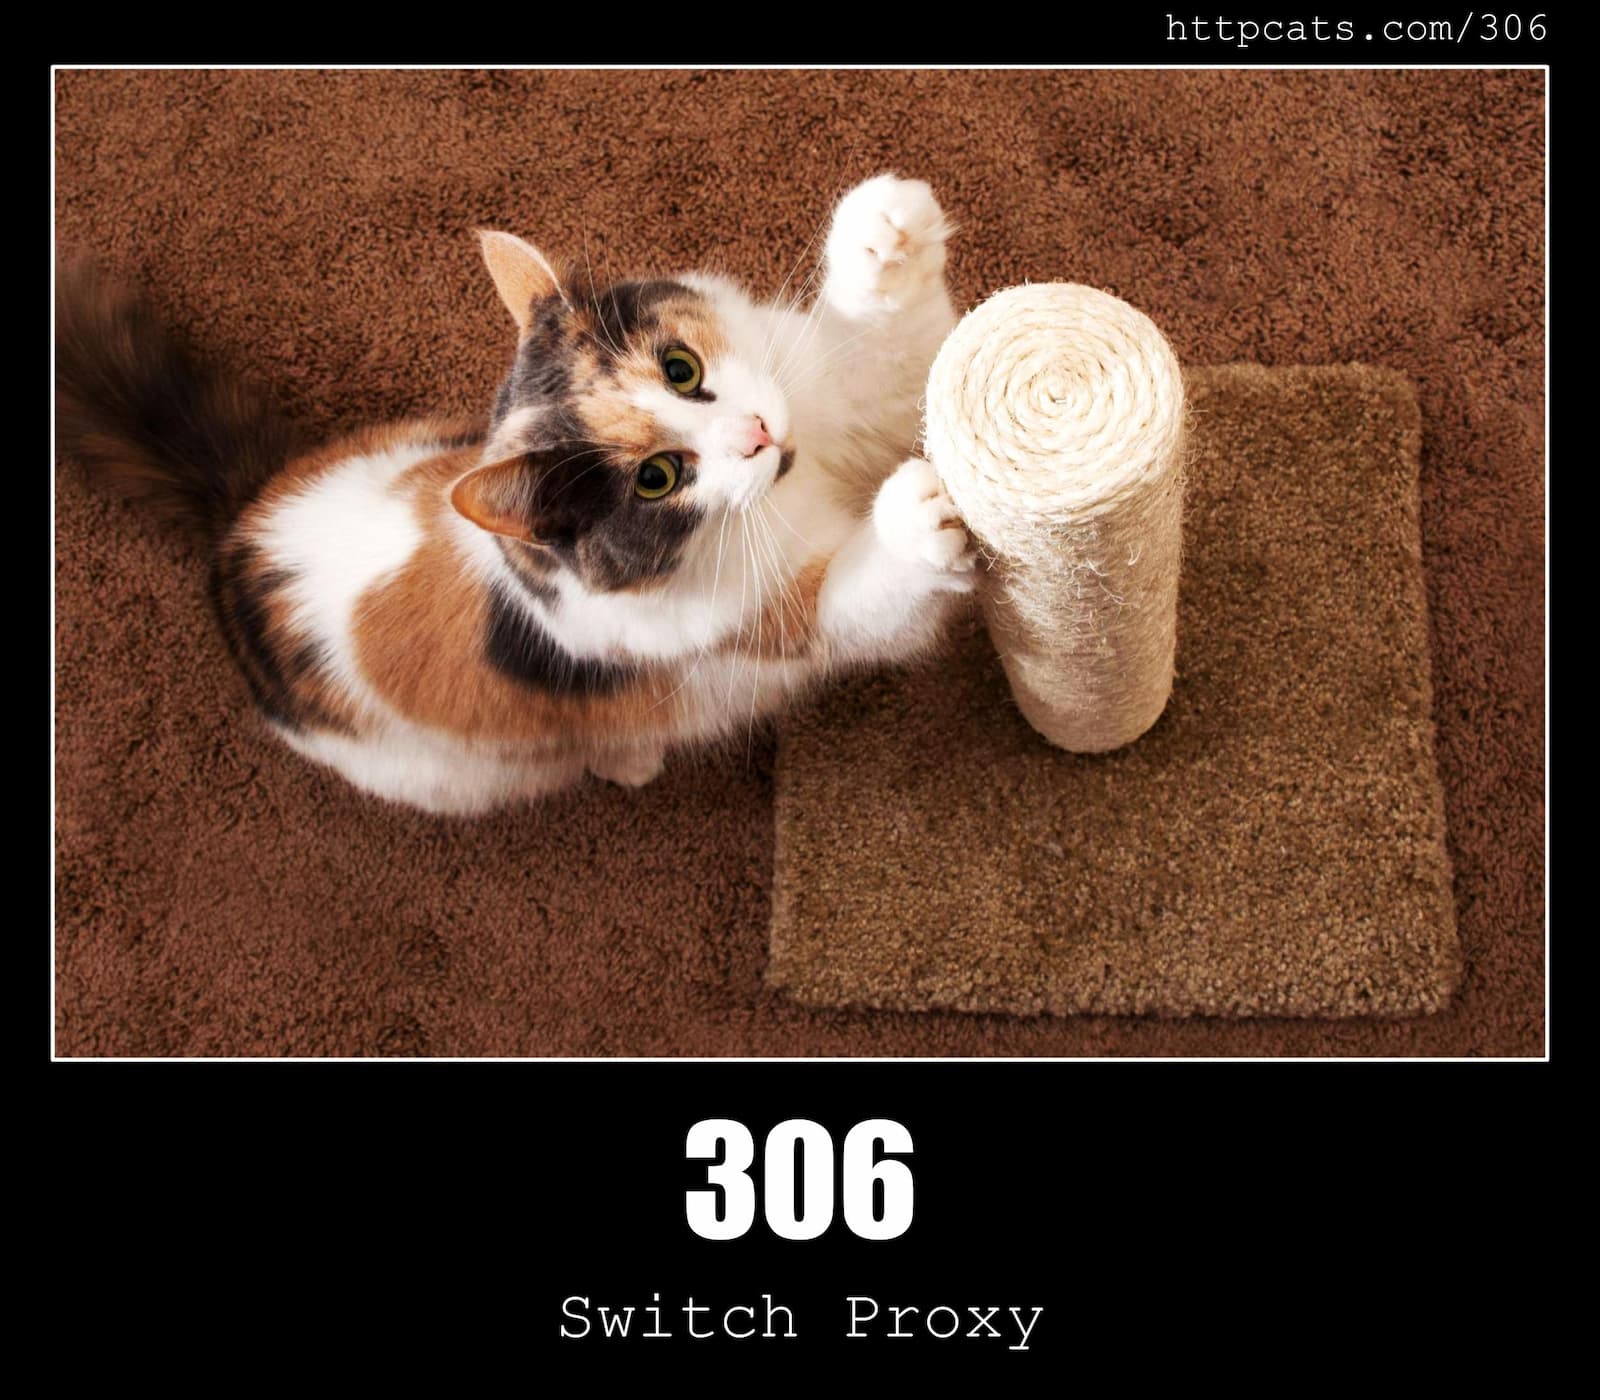 HTTP Status Code 306 Switch Proxy & Cats